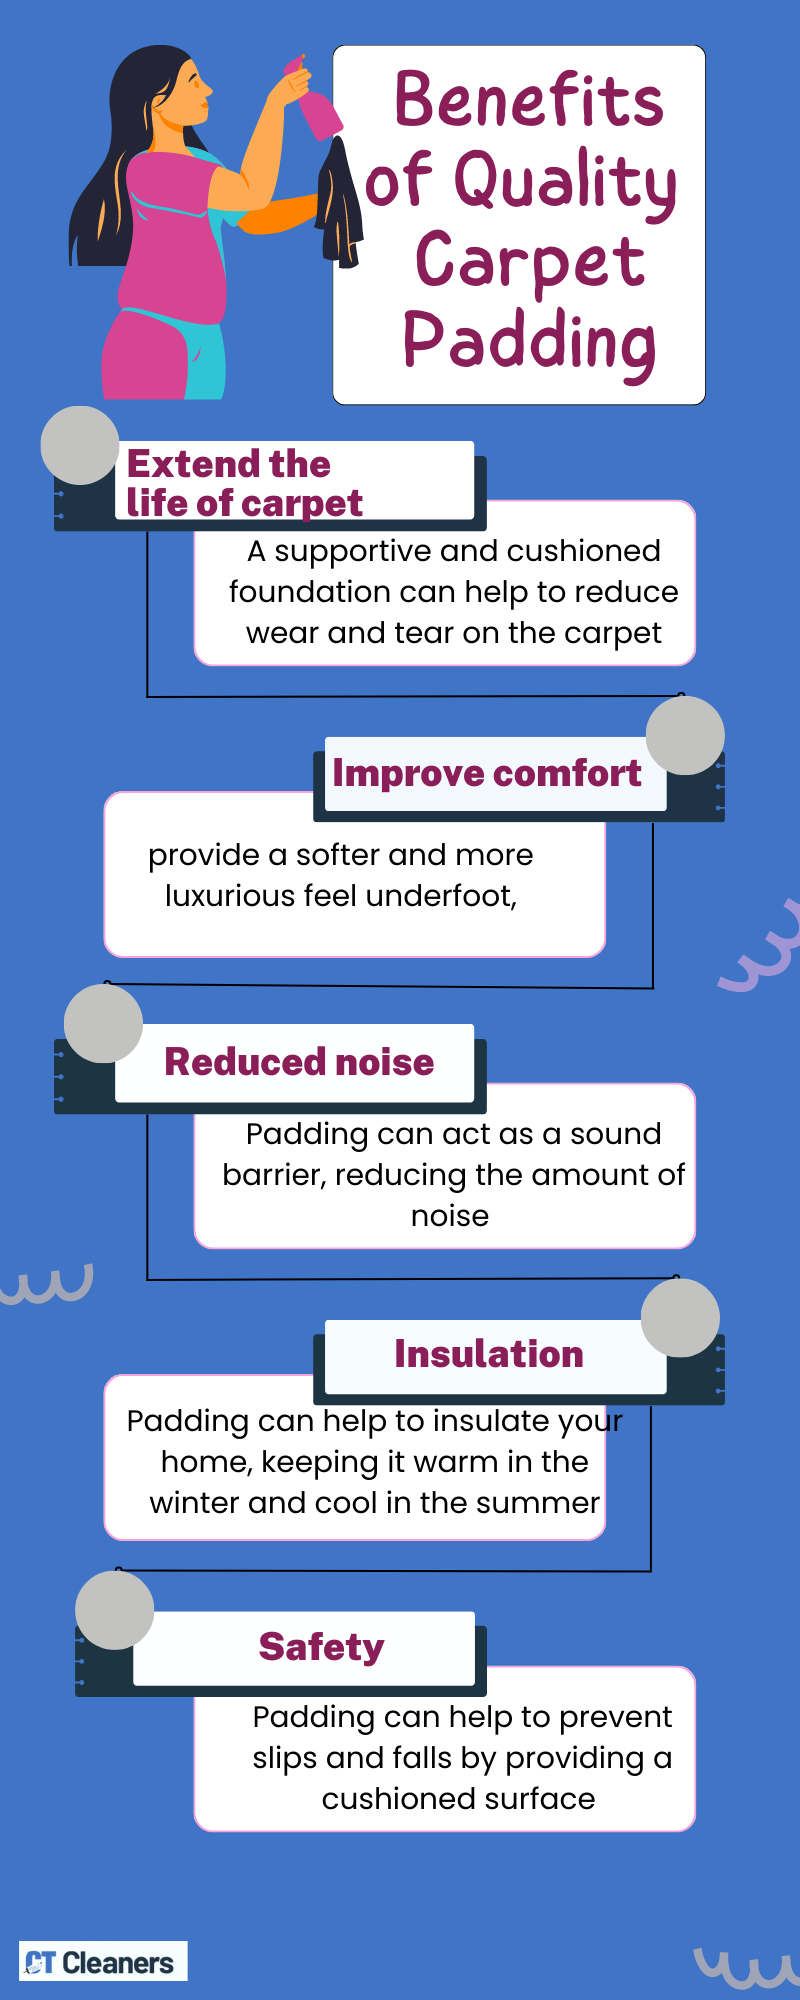 Benefits of Quality Carpet Padding (1)